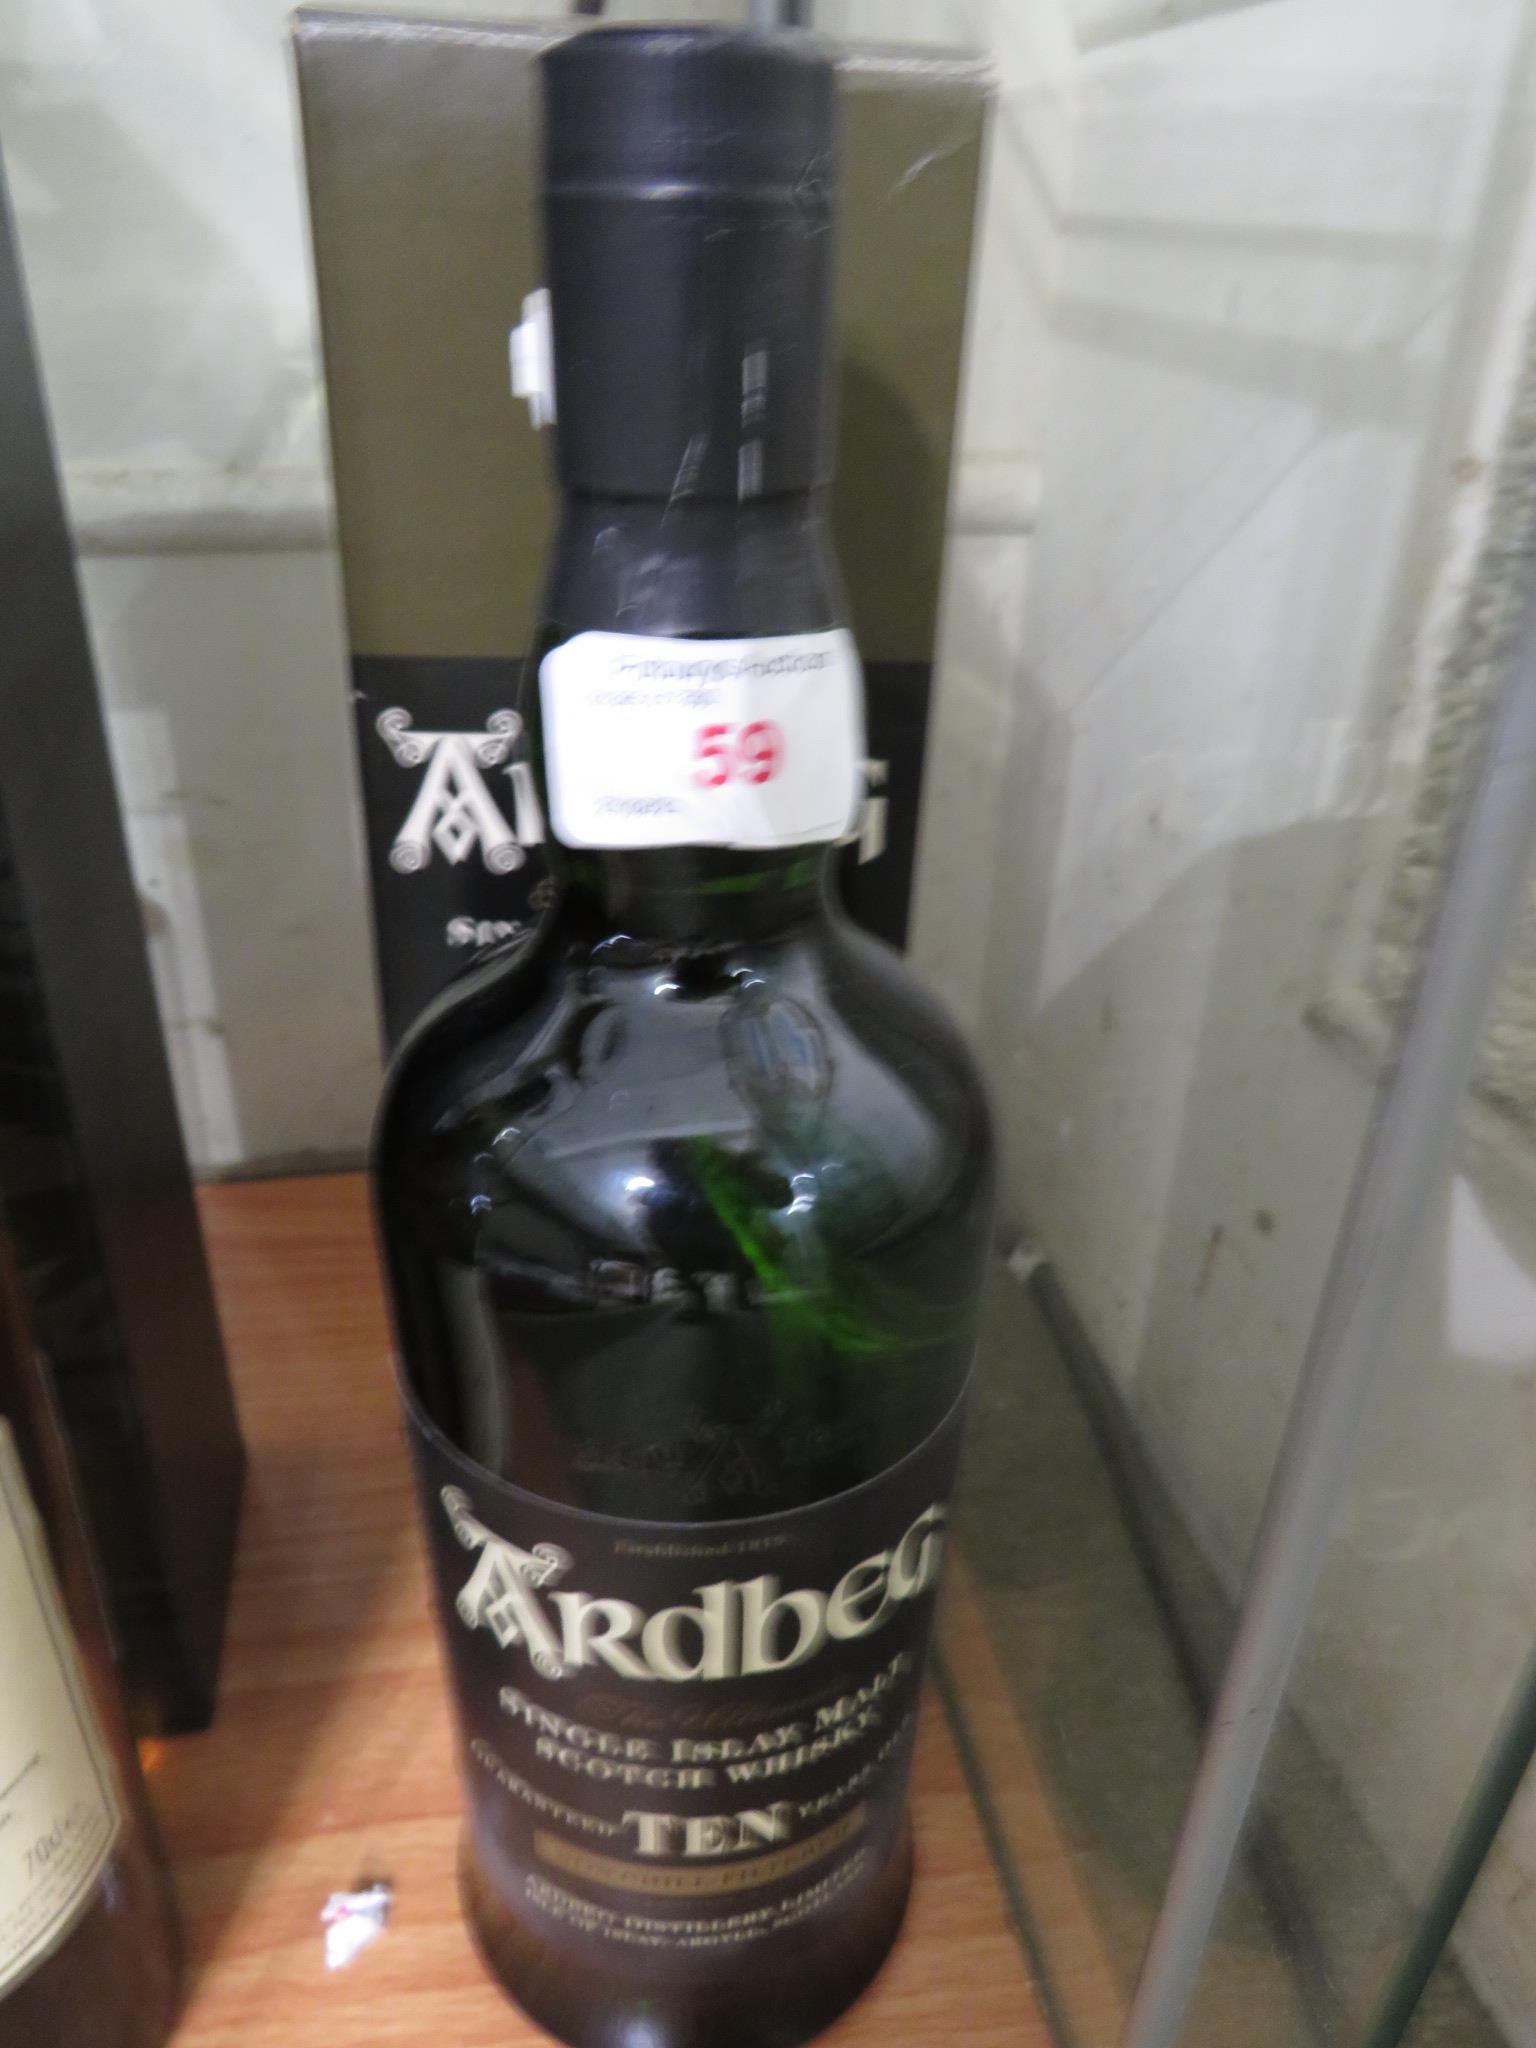 Ardbeg single Islay malt Scotch whisky aged ten years, 46%, 70cl, (one bottle, boxed)